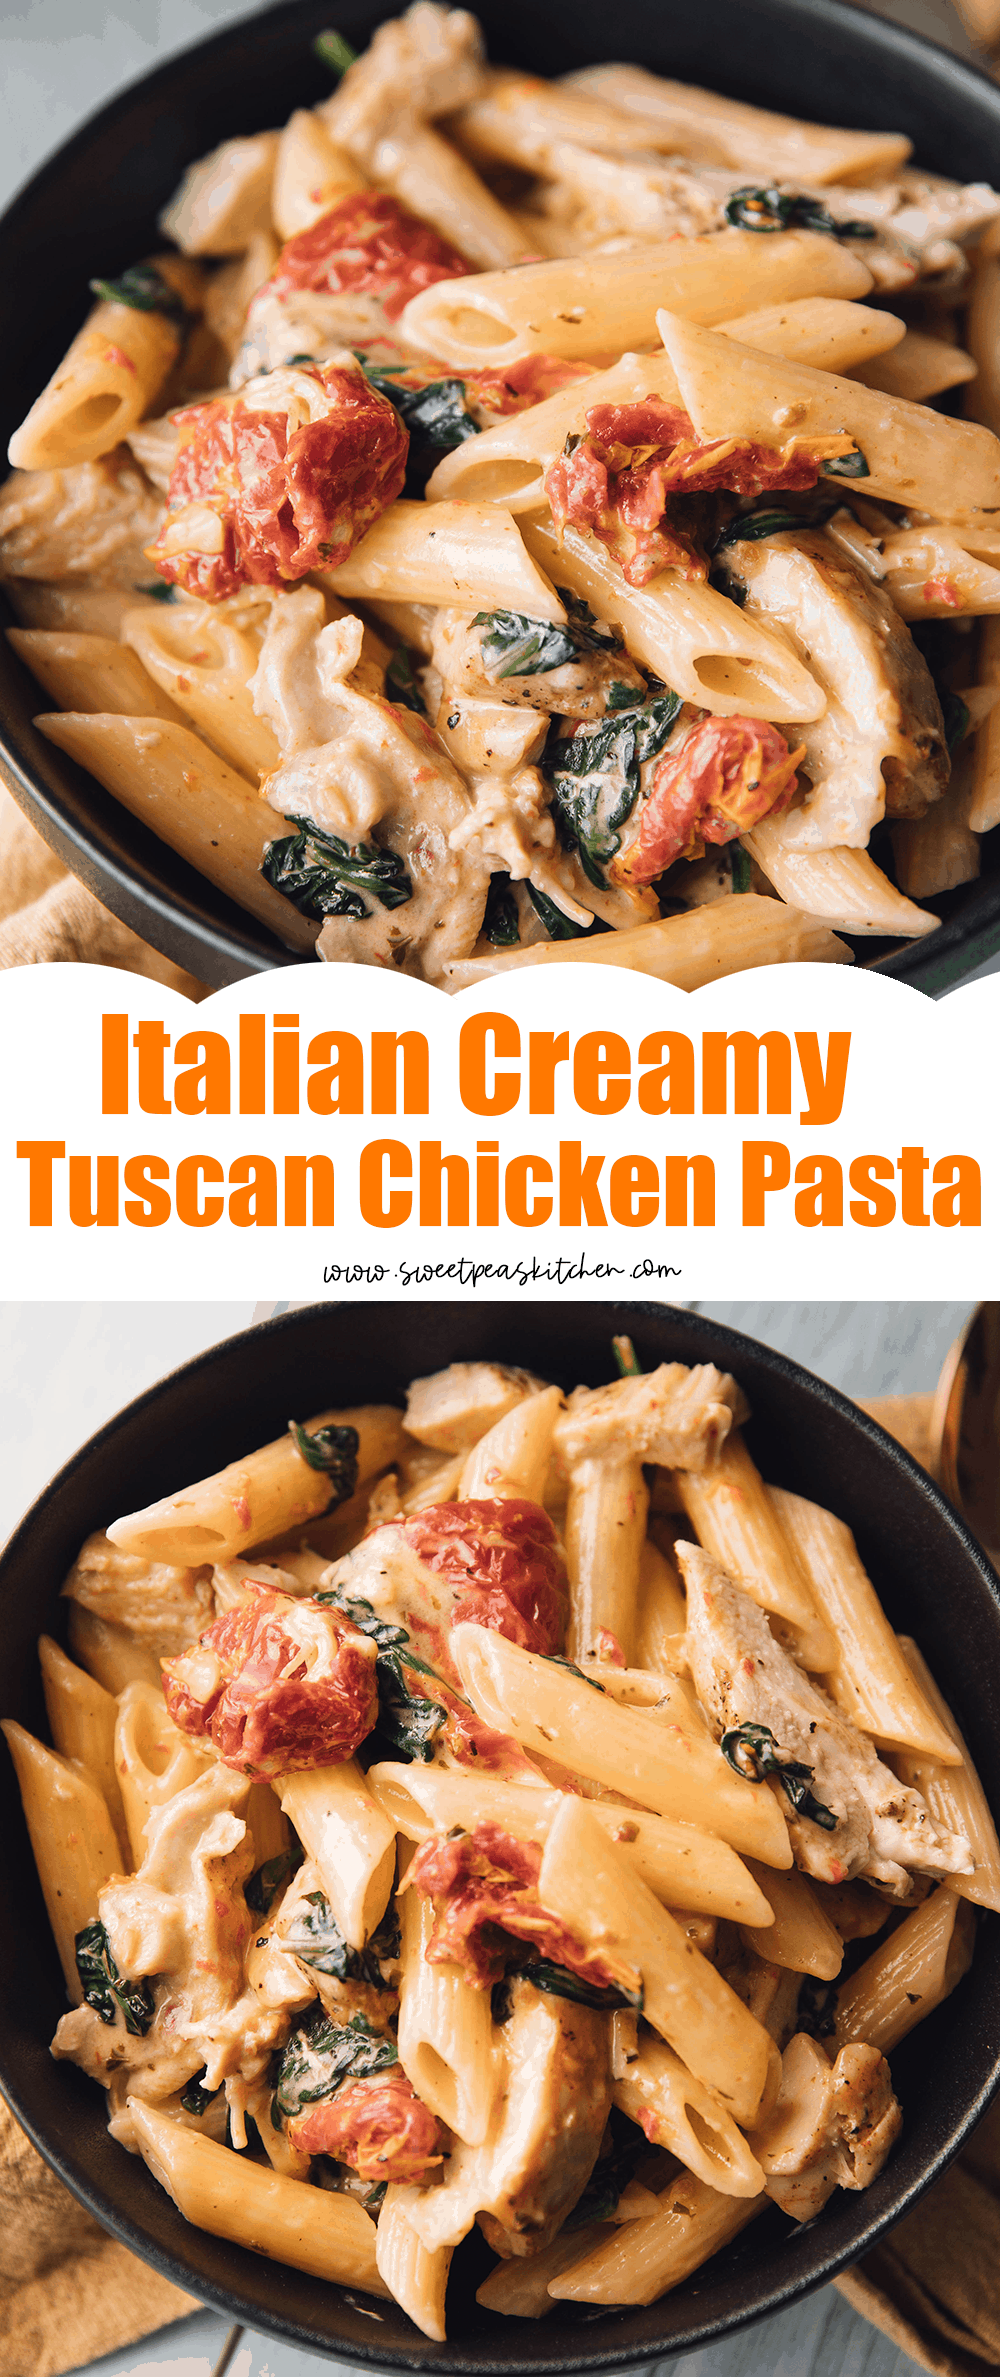 Italian Creamy Tuscan Chicken Pasta